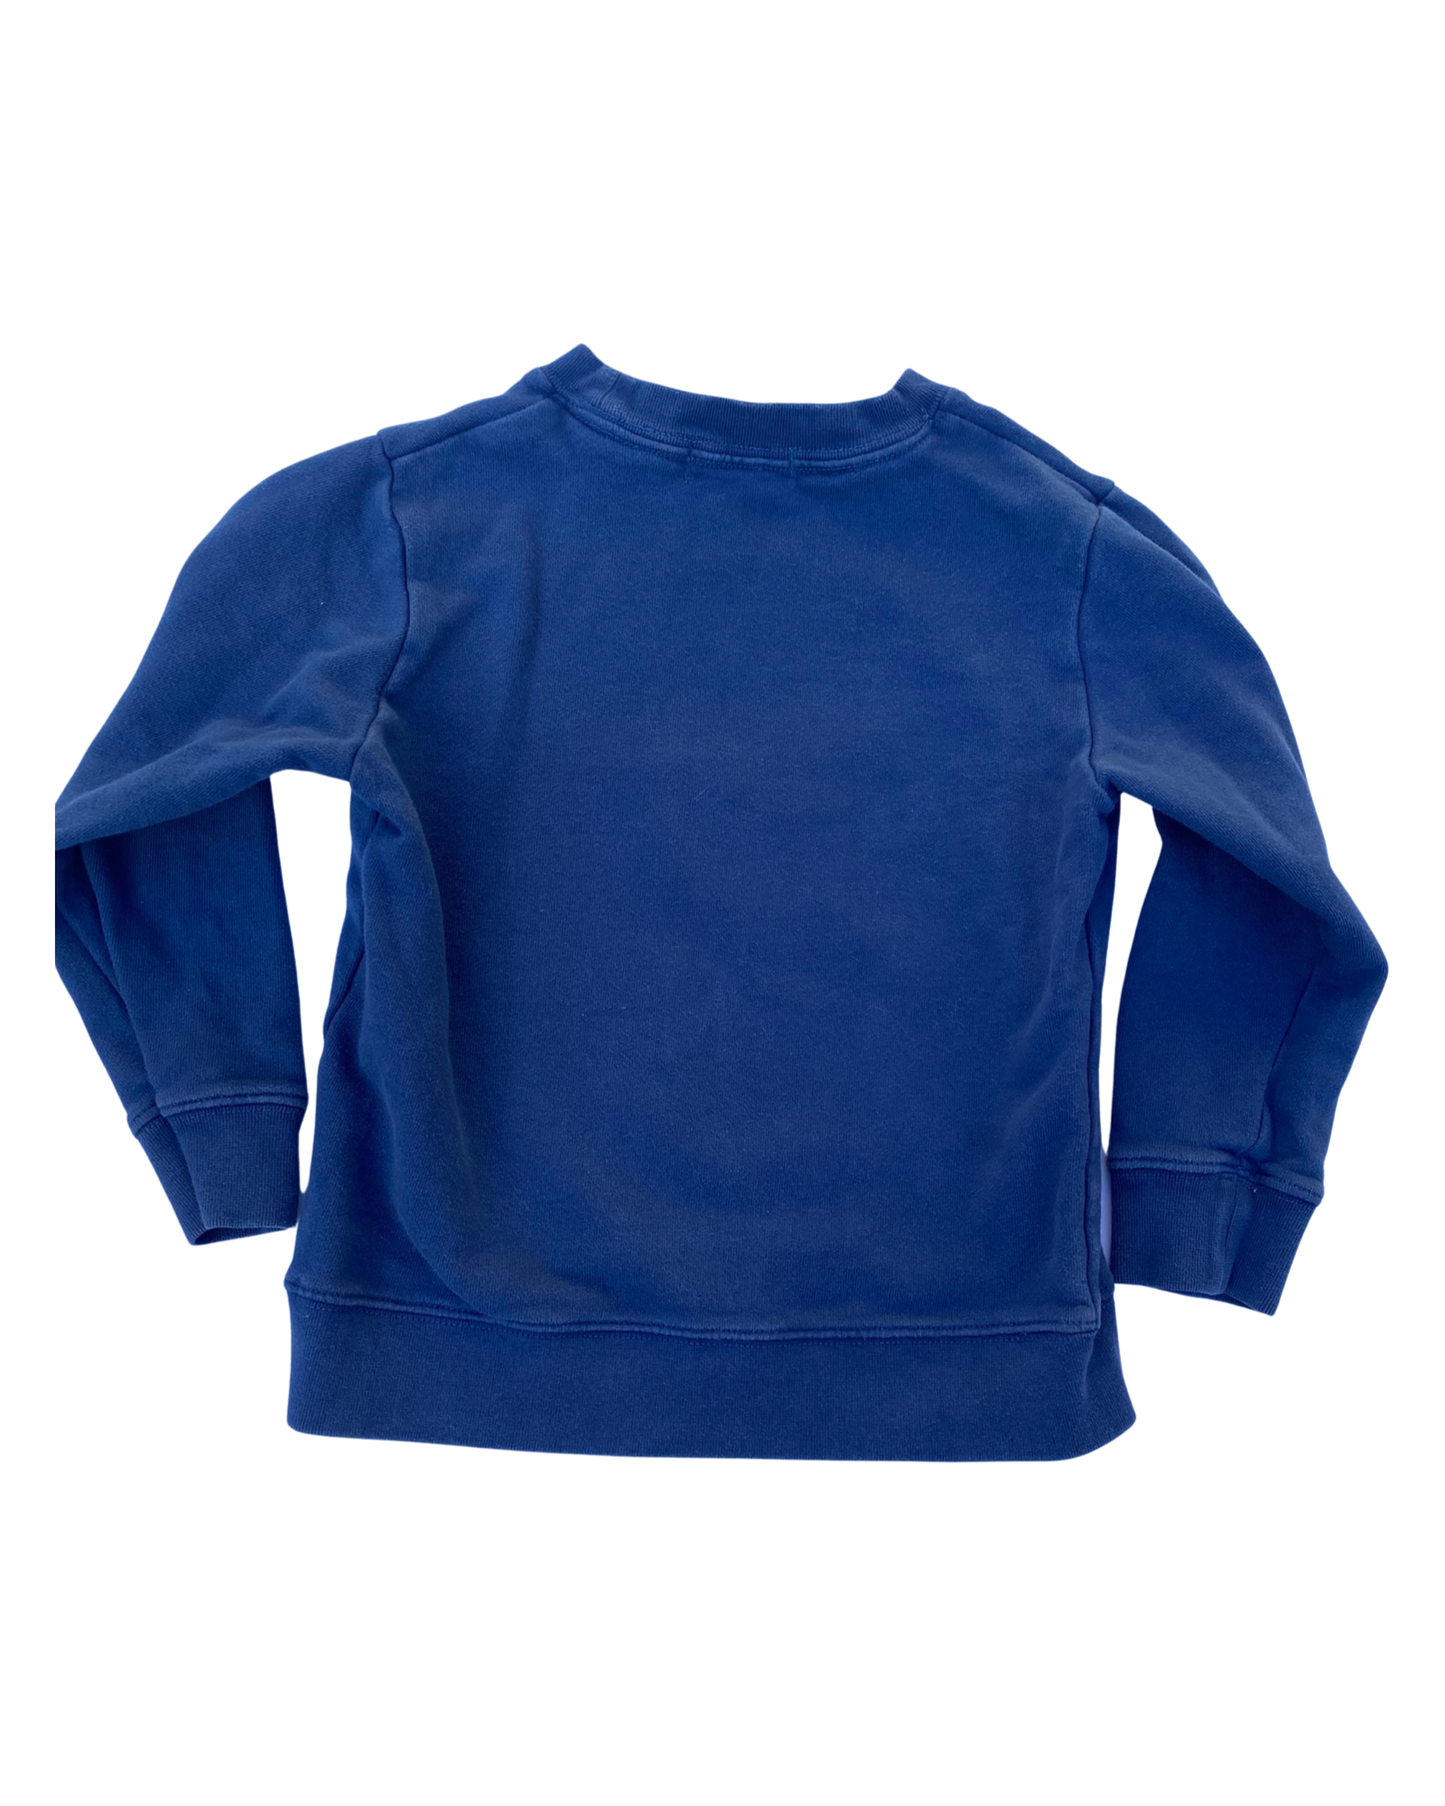 Stella McCartney S sweatshirt (size 3-4yrs)